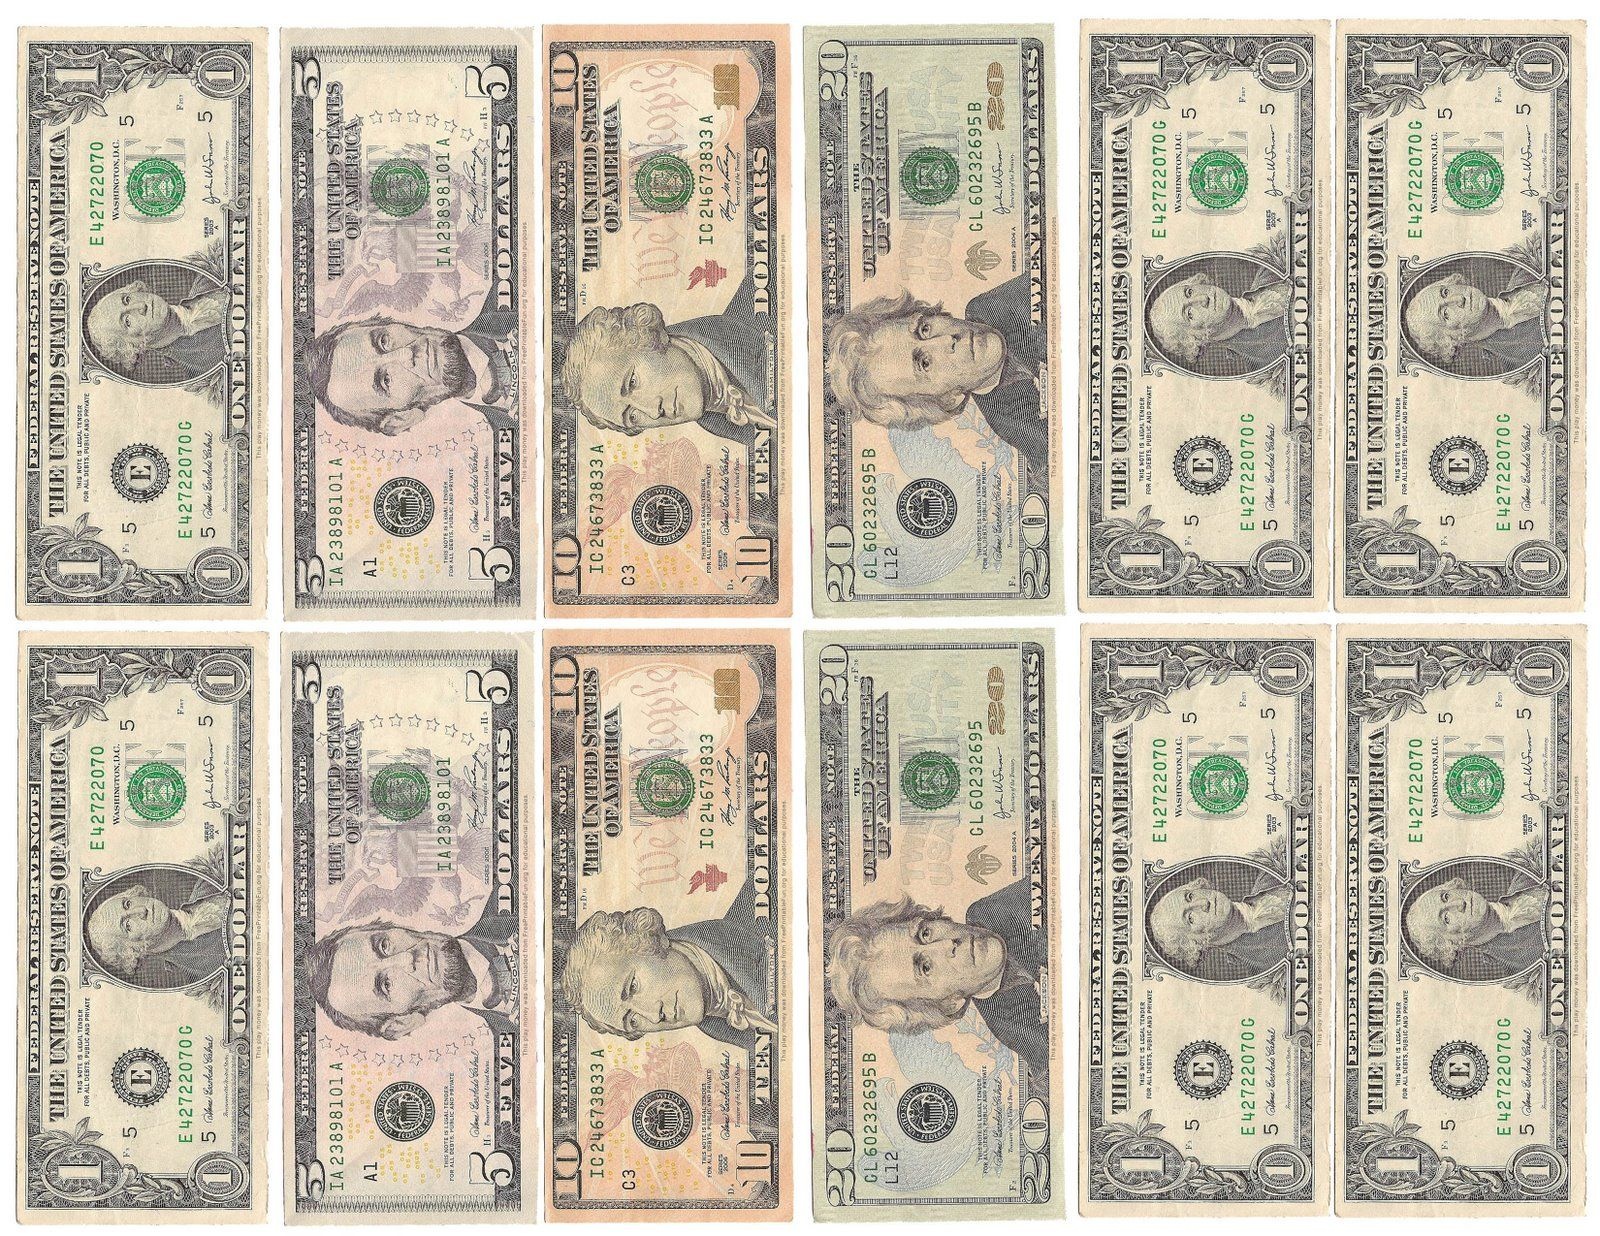 free-printable-fake-money-that-looks-real-free-printable